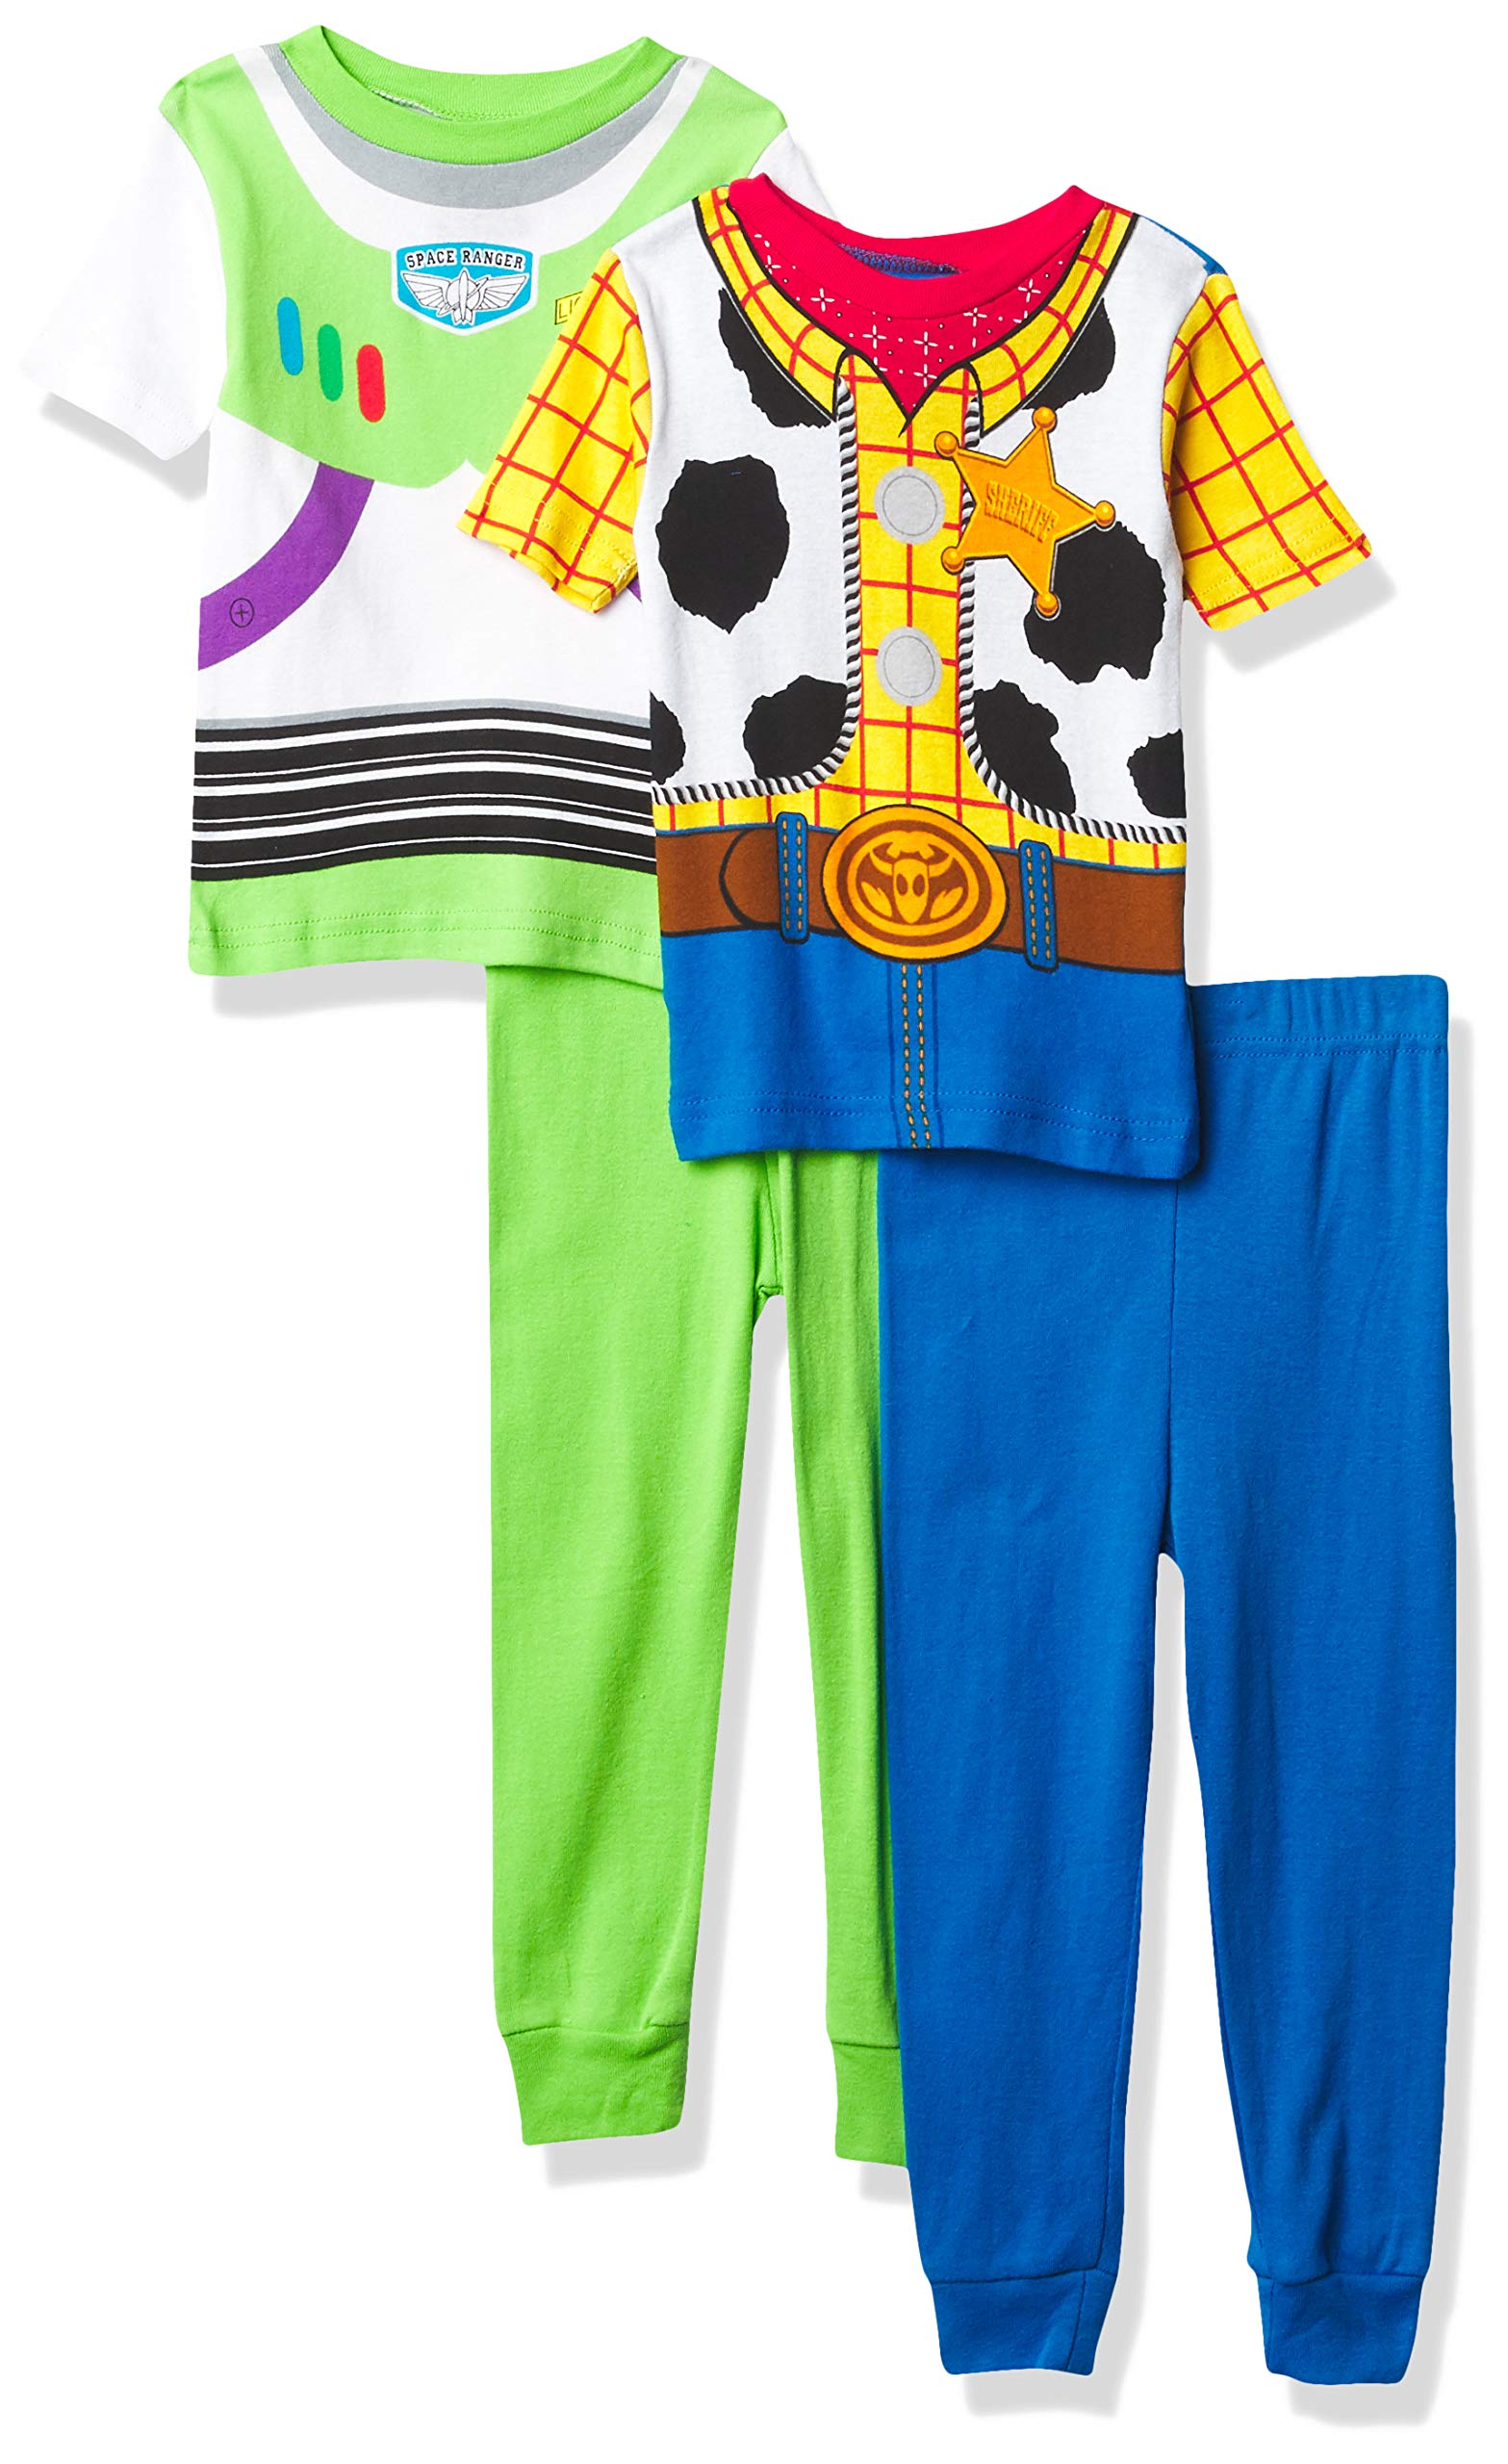 Disney Boys' 4-Piece Snug-fit Cotton Pajamas Set